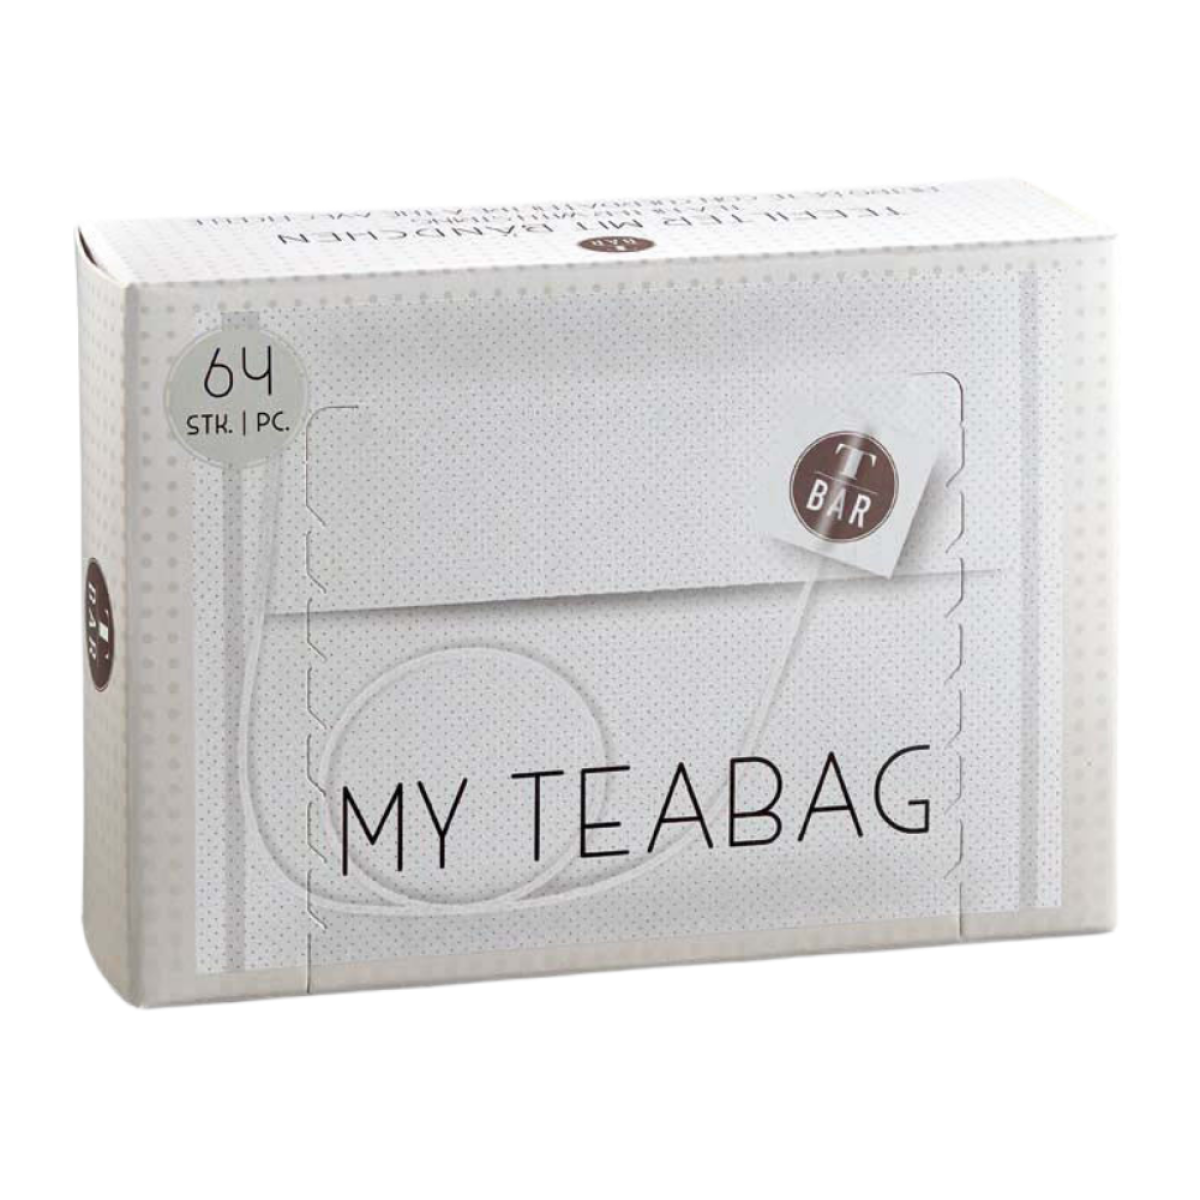 Teafilter “My Teabag” 64pcs